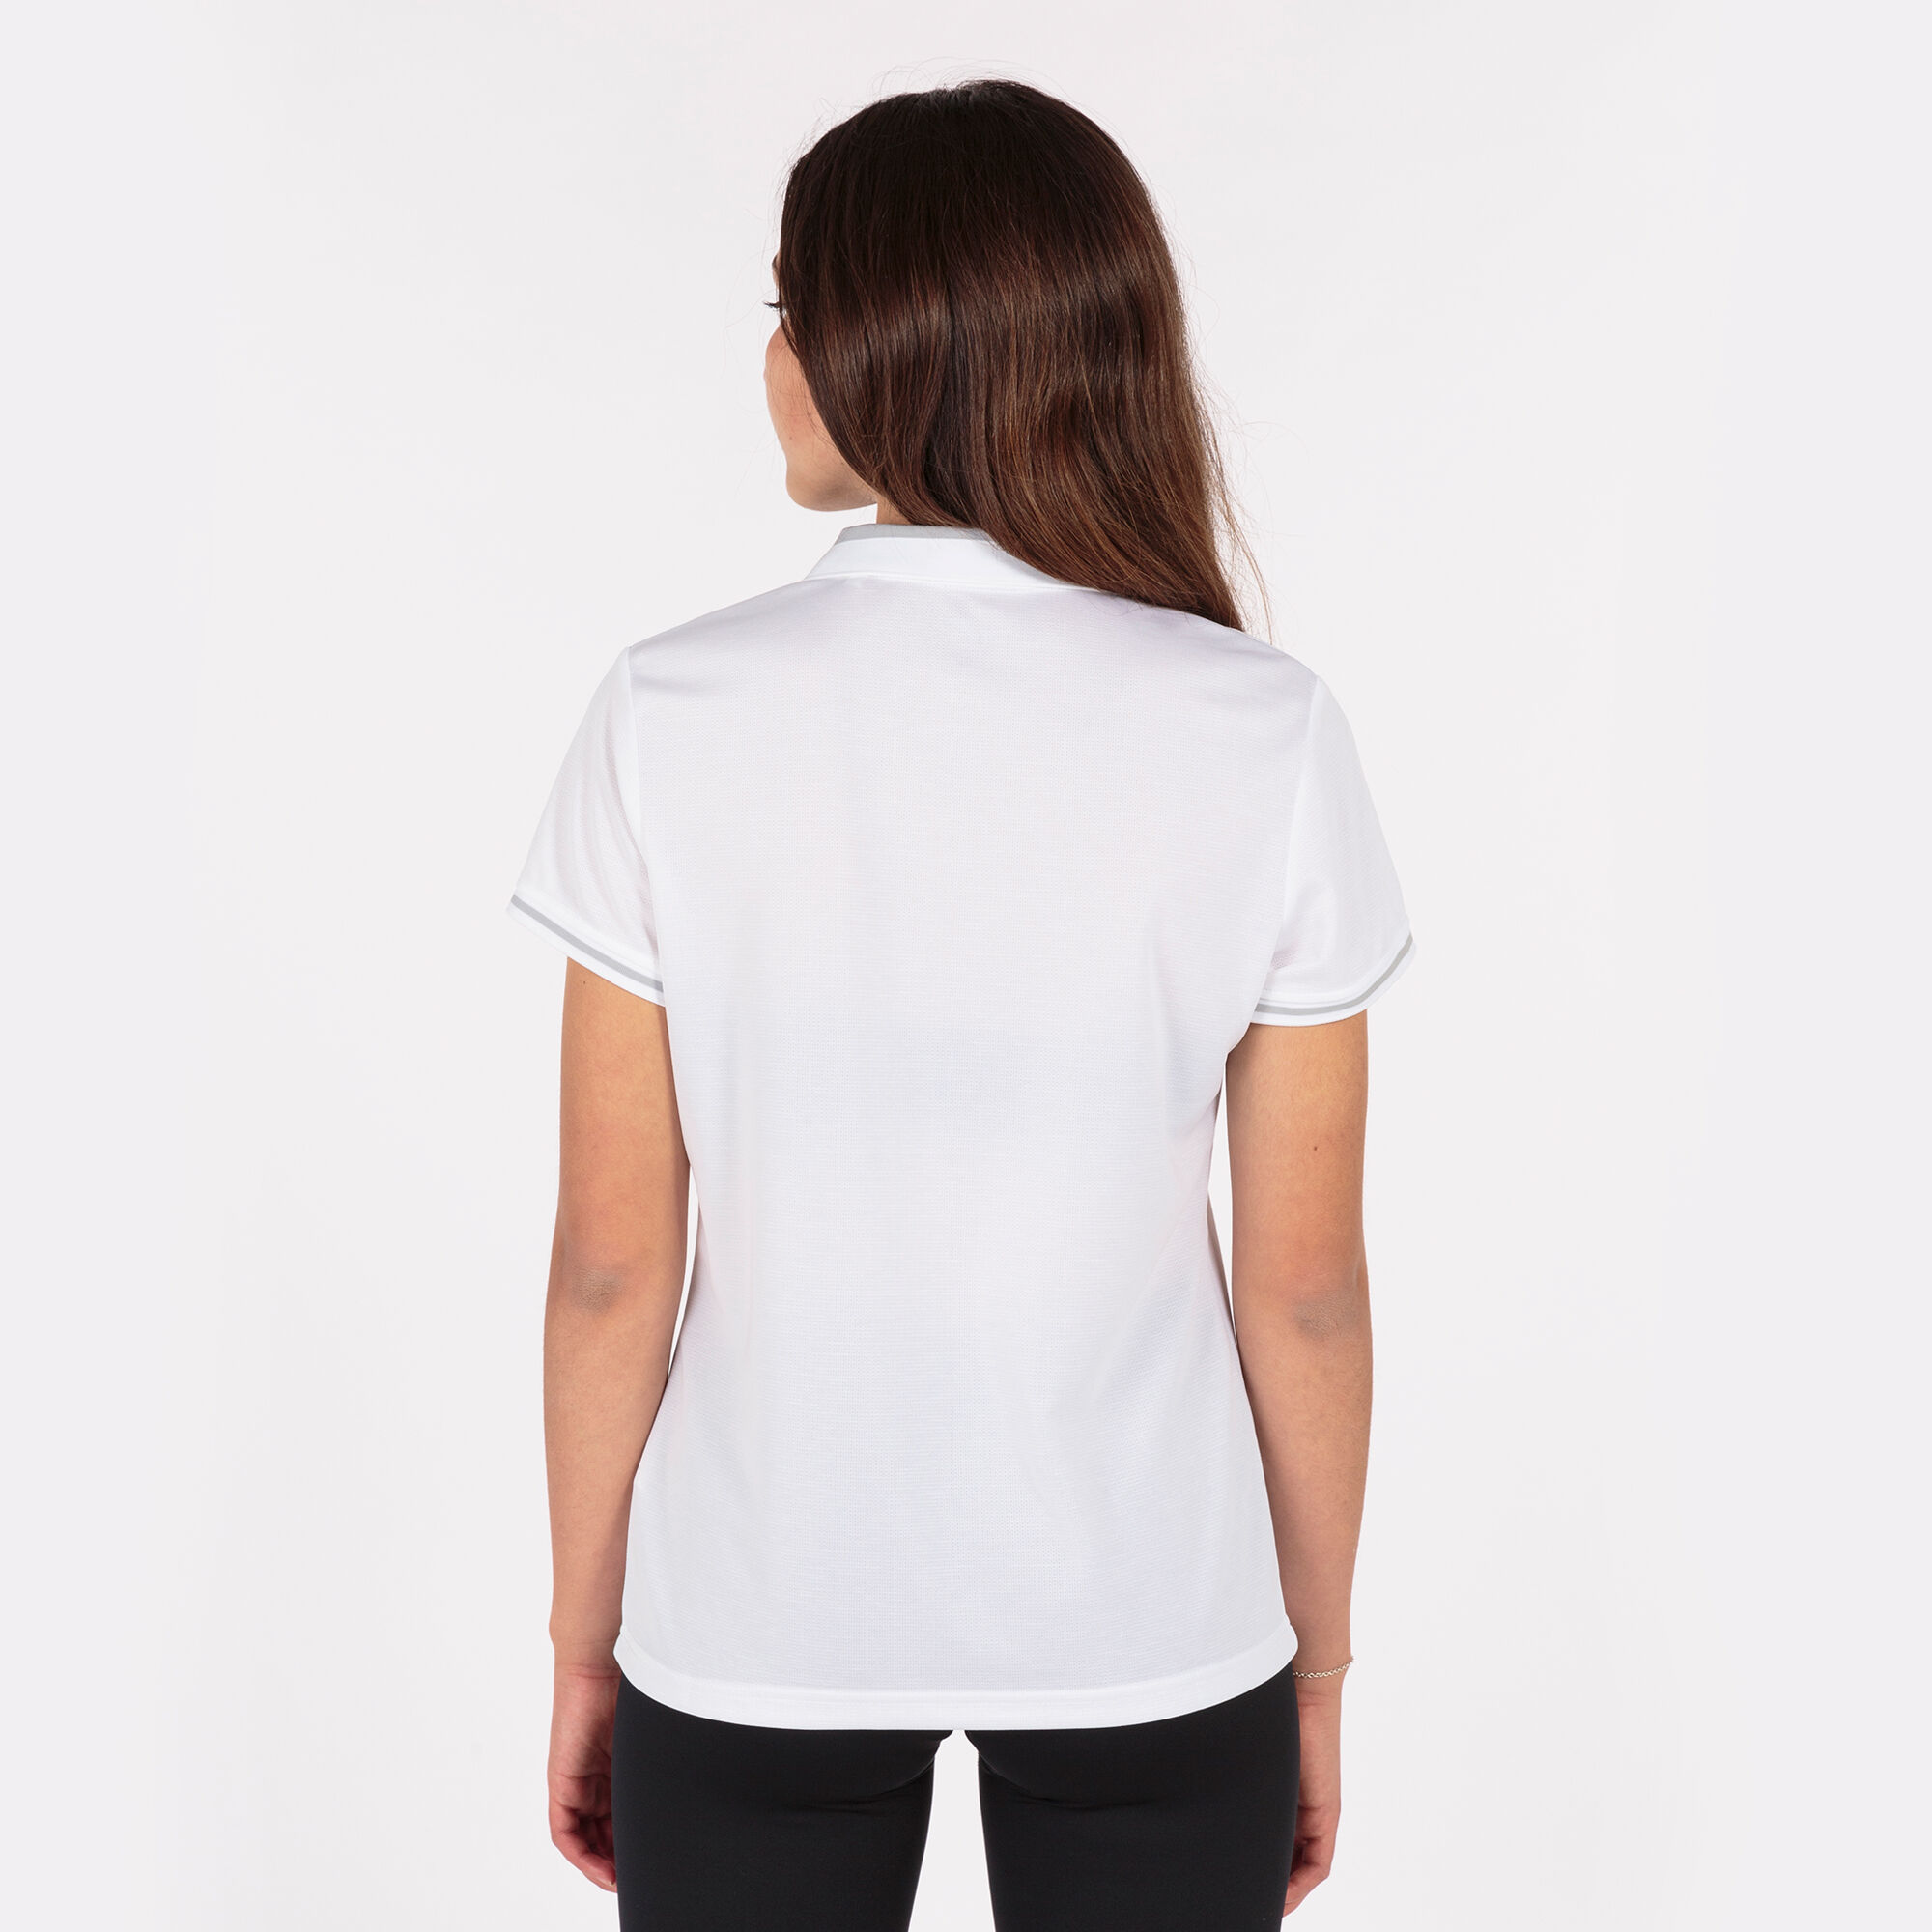 Polo shirt short-sleeve woman Championship VI white gray